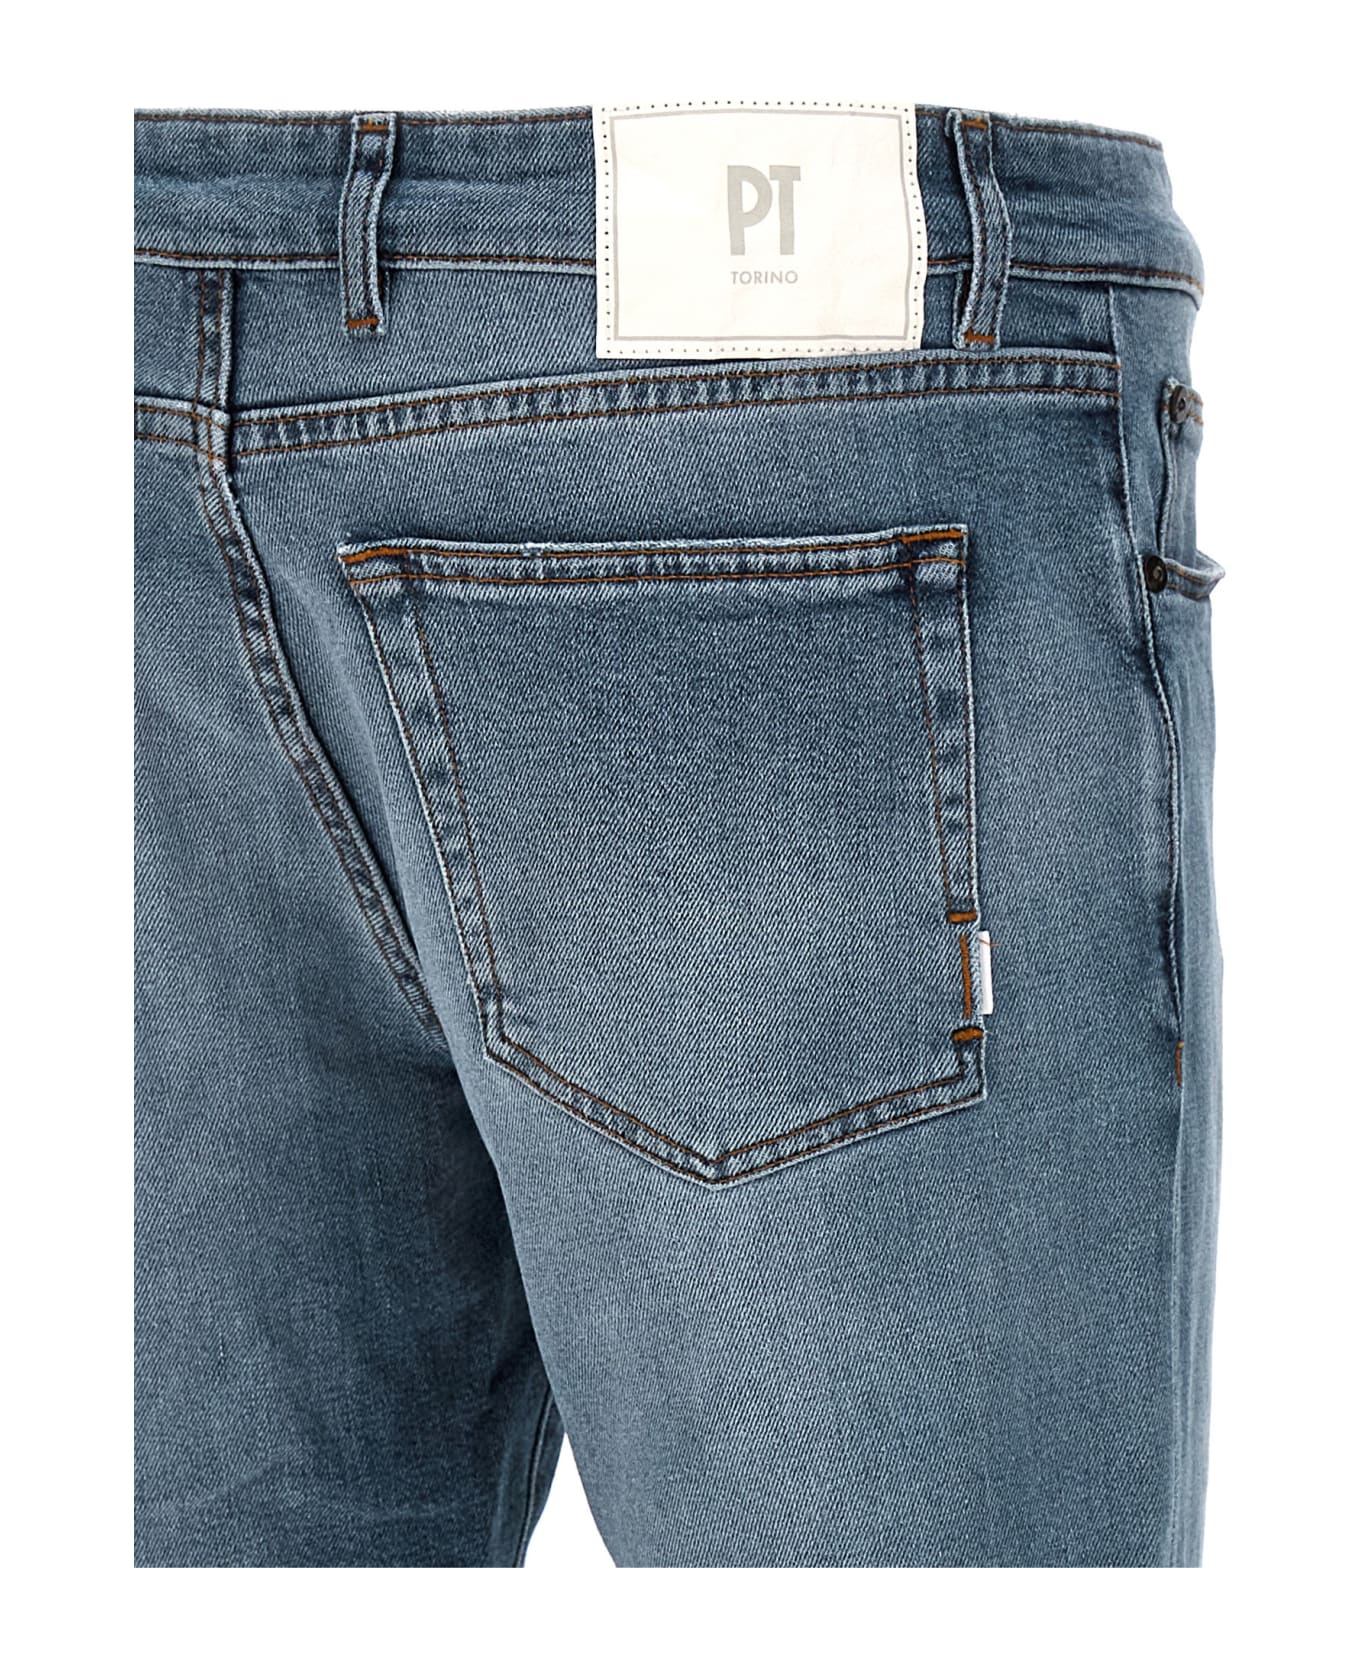 PT Torino 'swing' Jeans